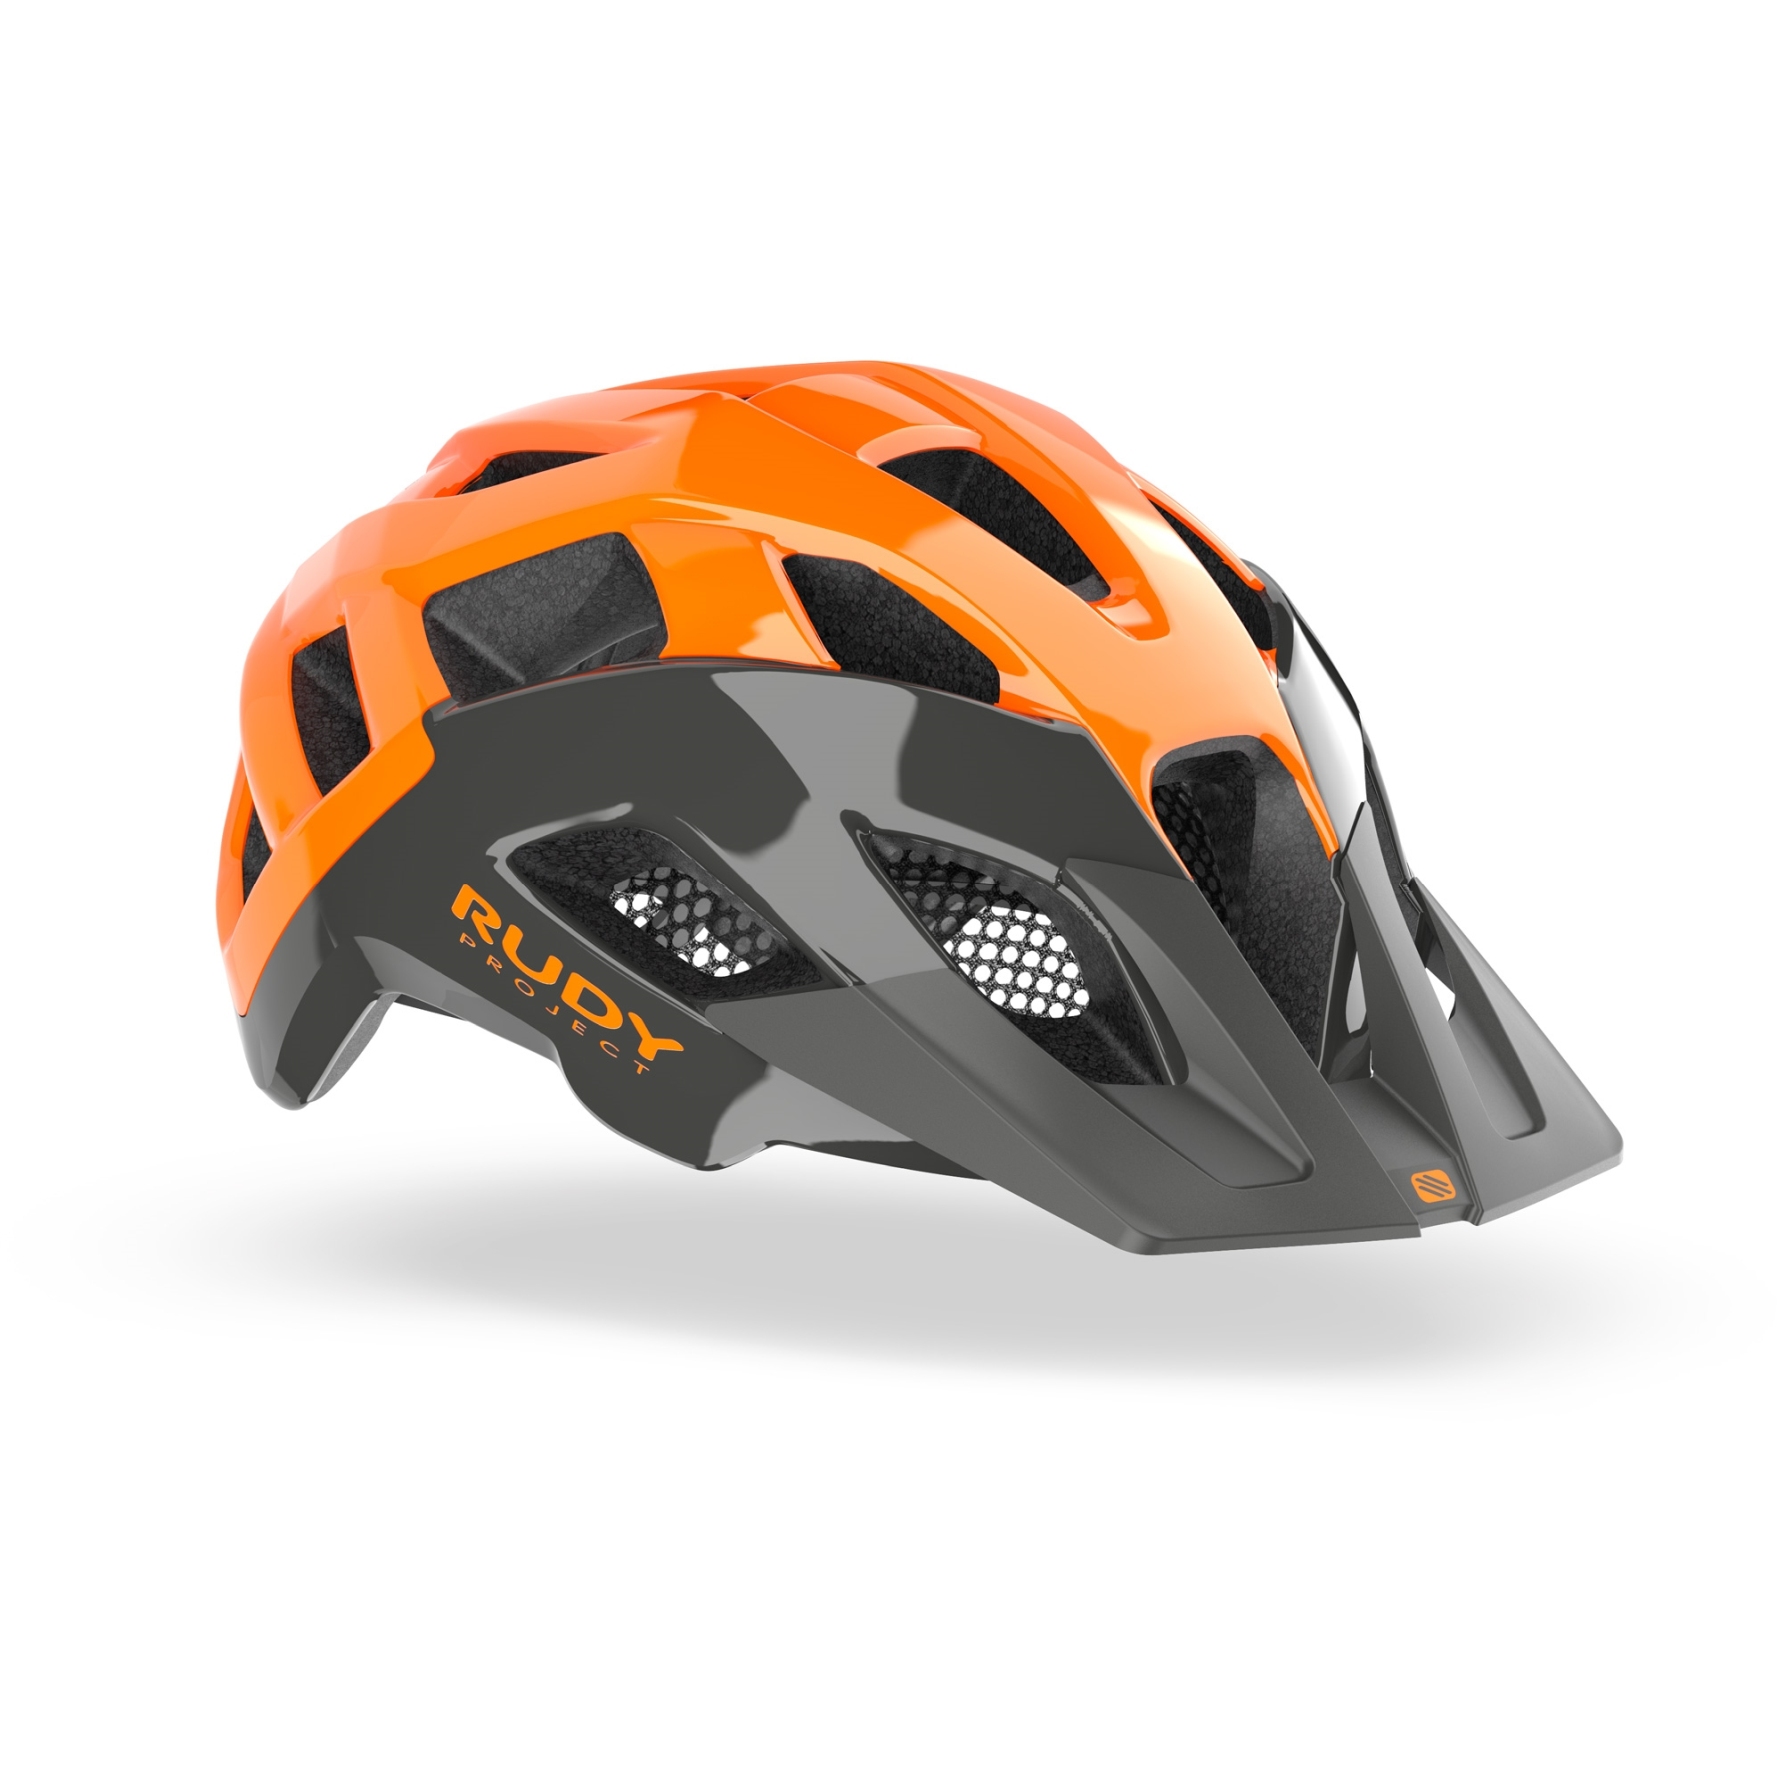 Produktbild von Rudy Project Crossway Helm - Lead/Orange Fluo Shiny